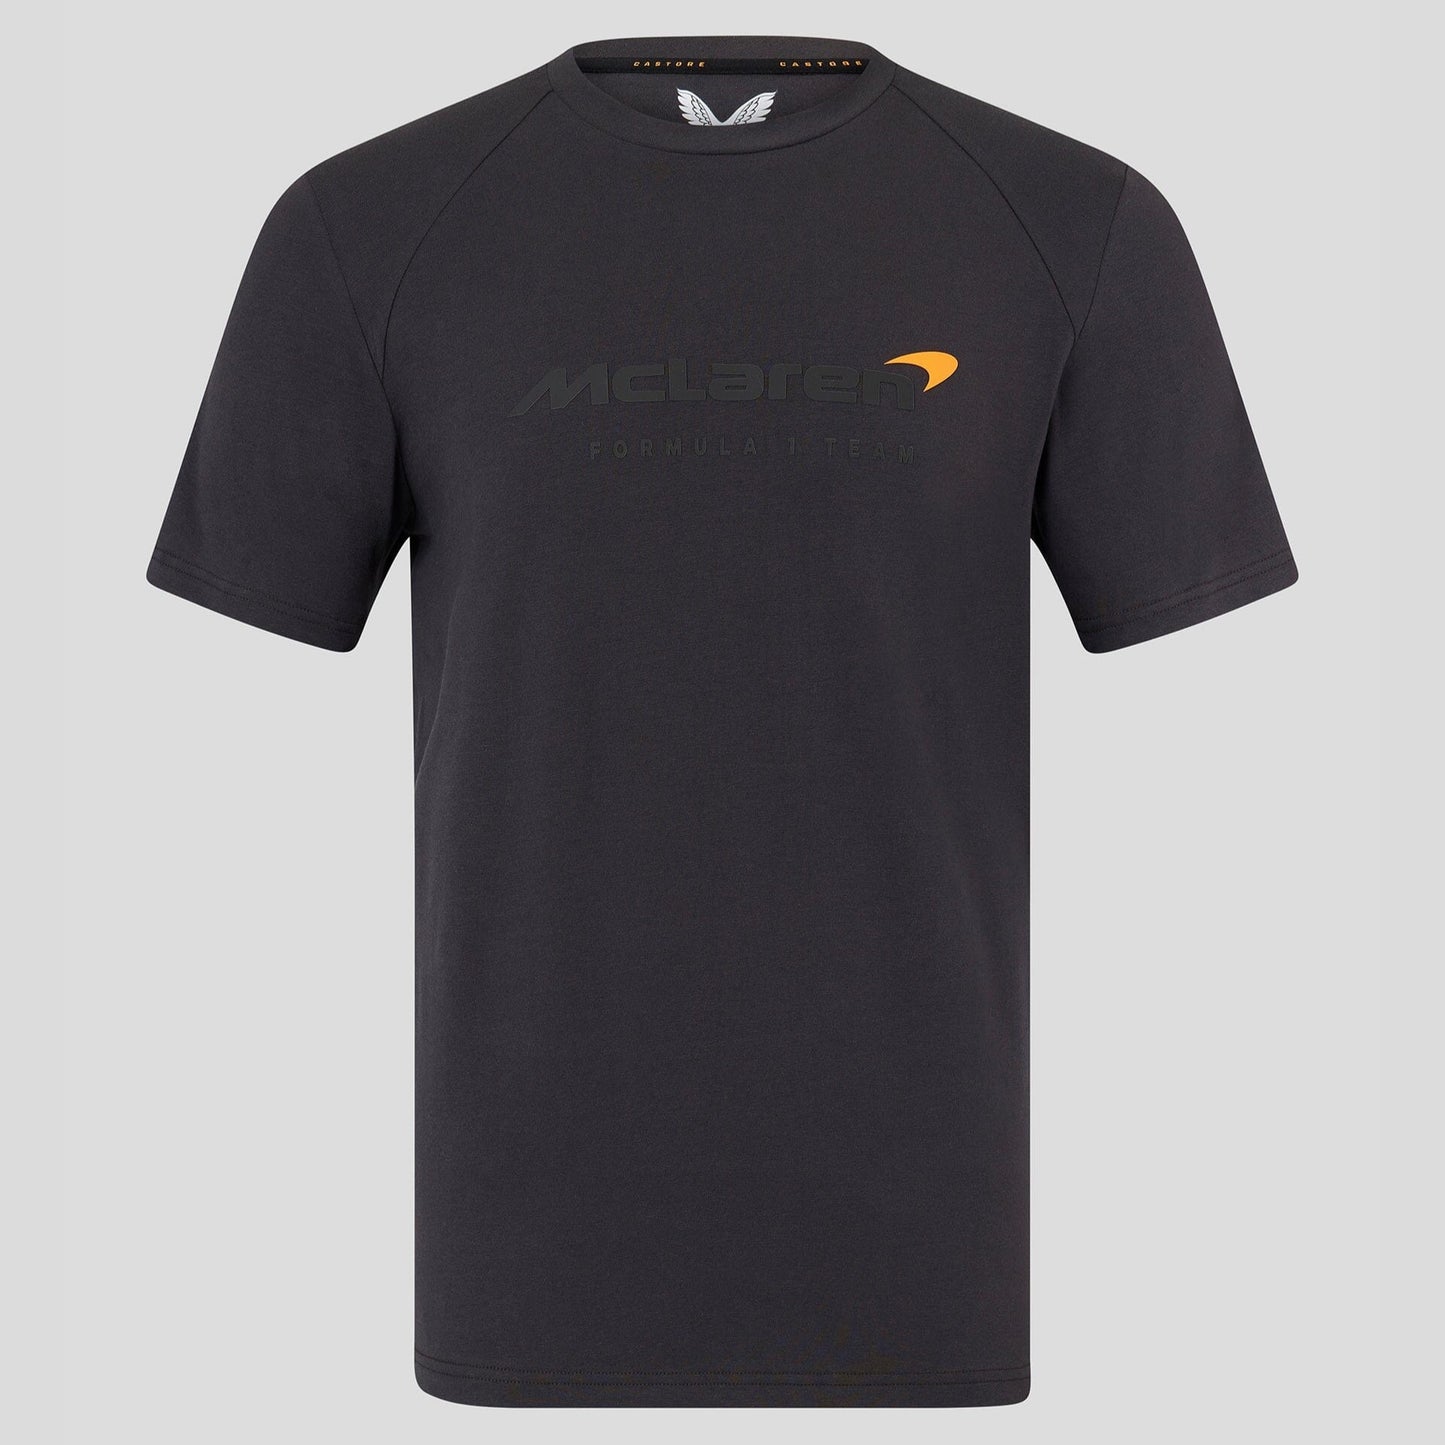 McLaren F1 Men's Lifestyle T-Shirt Dark Gray